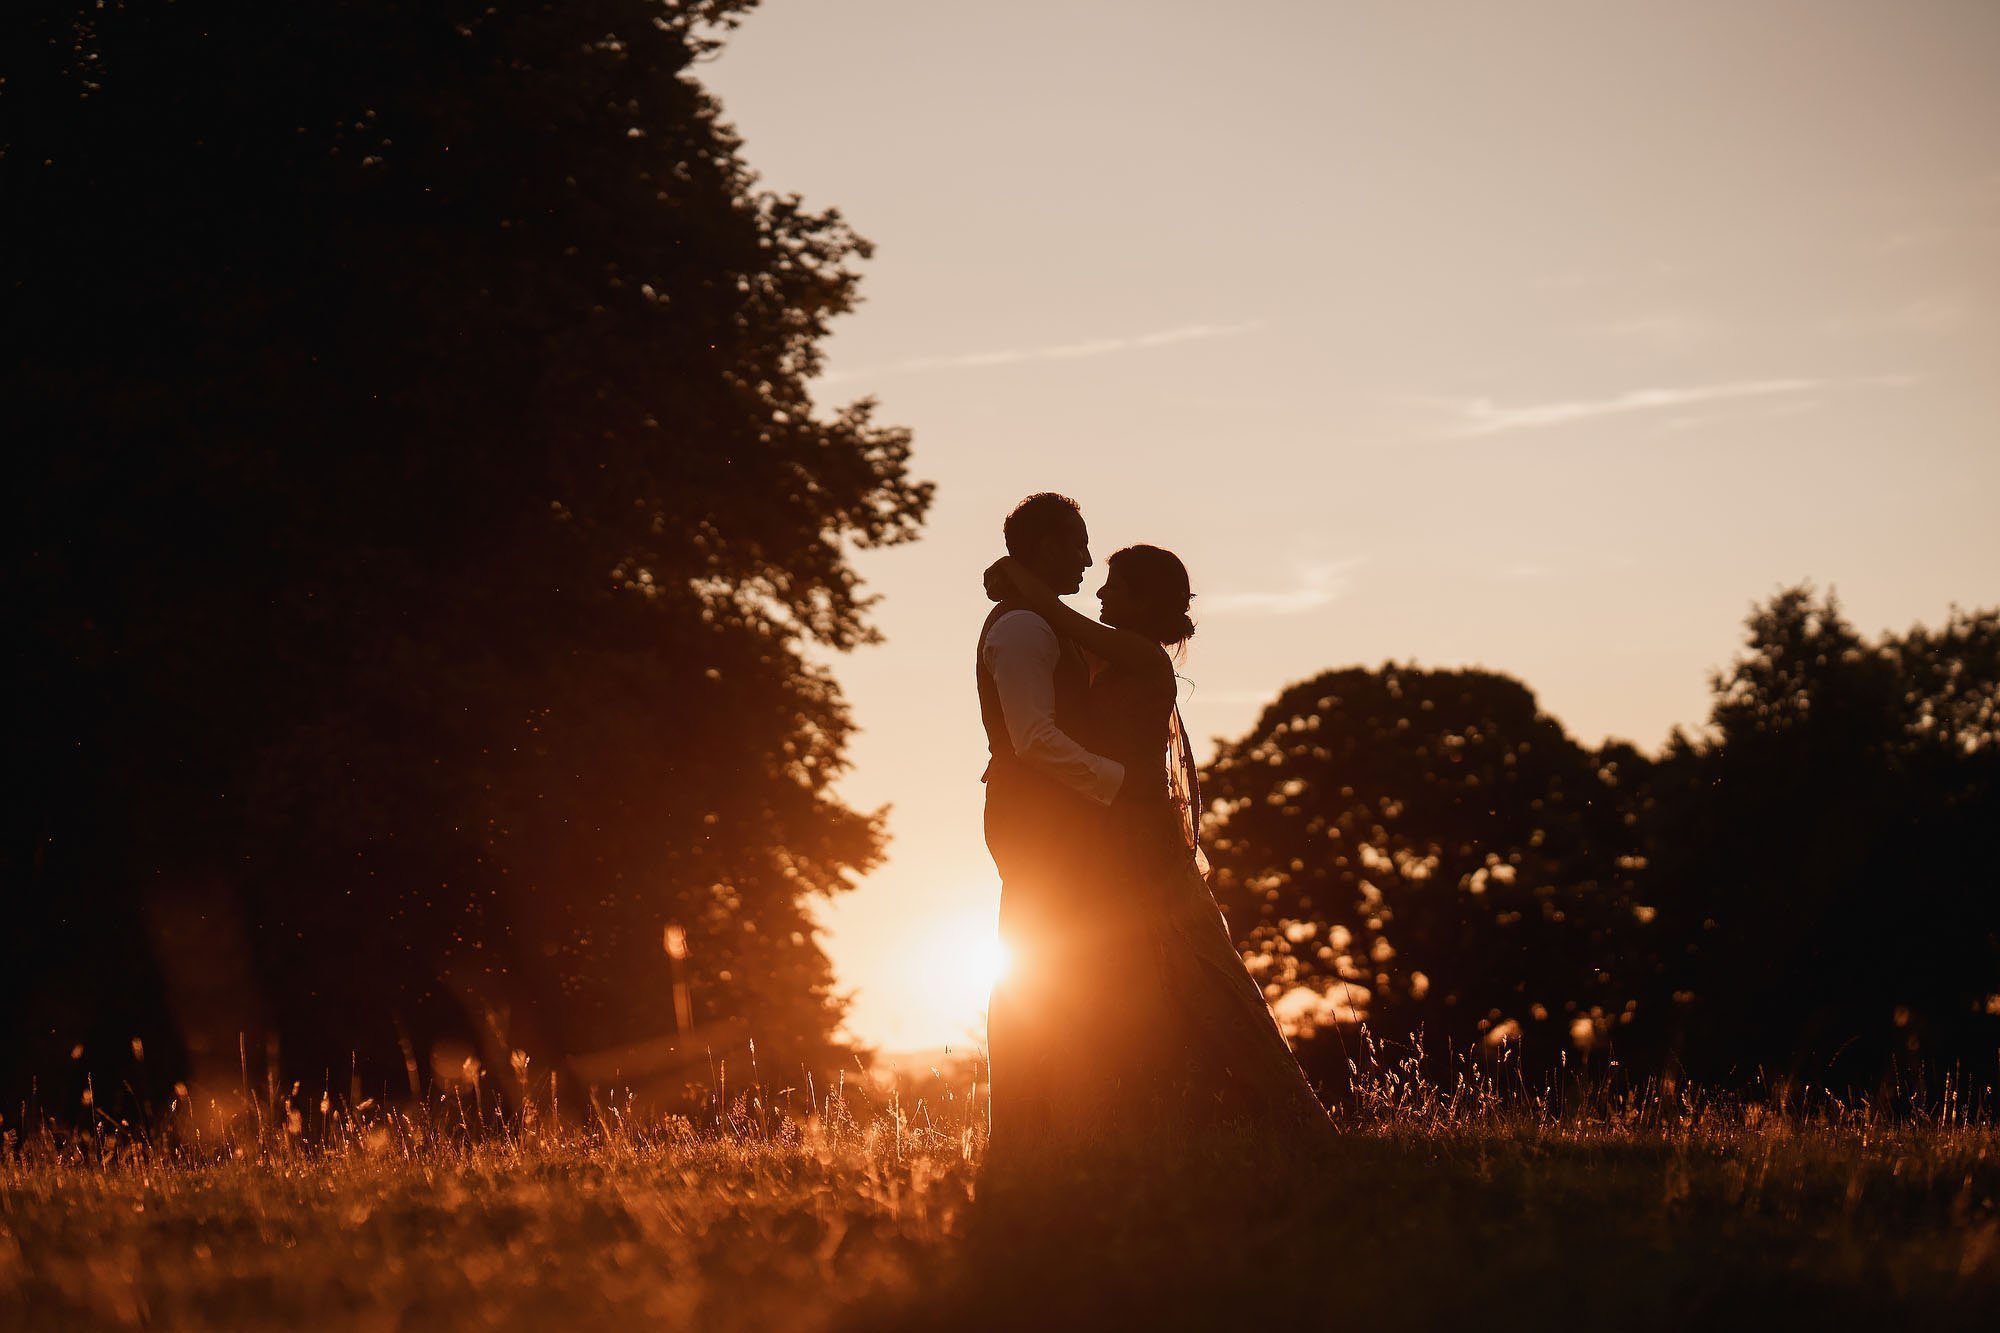 Bridwell park devon weddings - wedding photography at bridwell park by arj photography